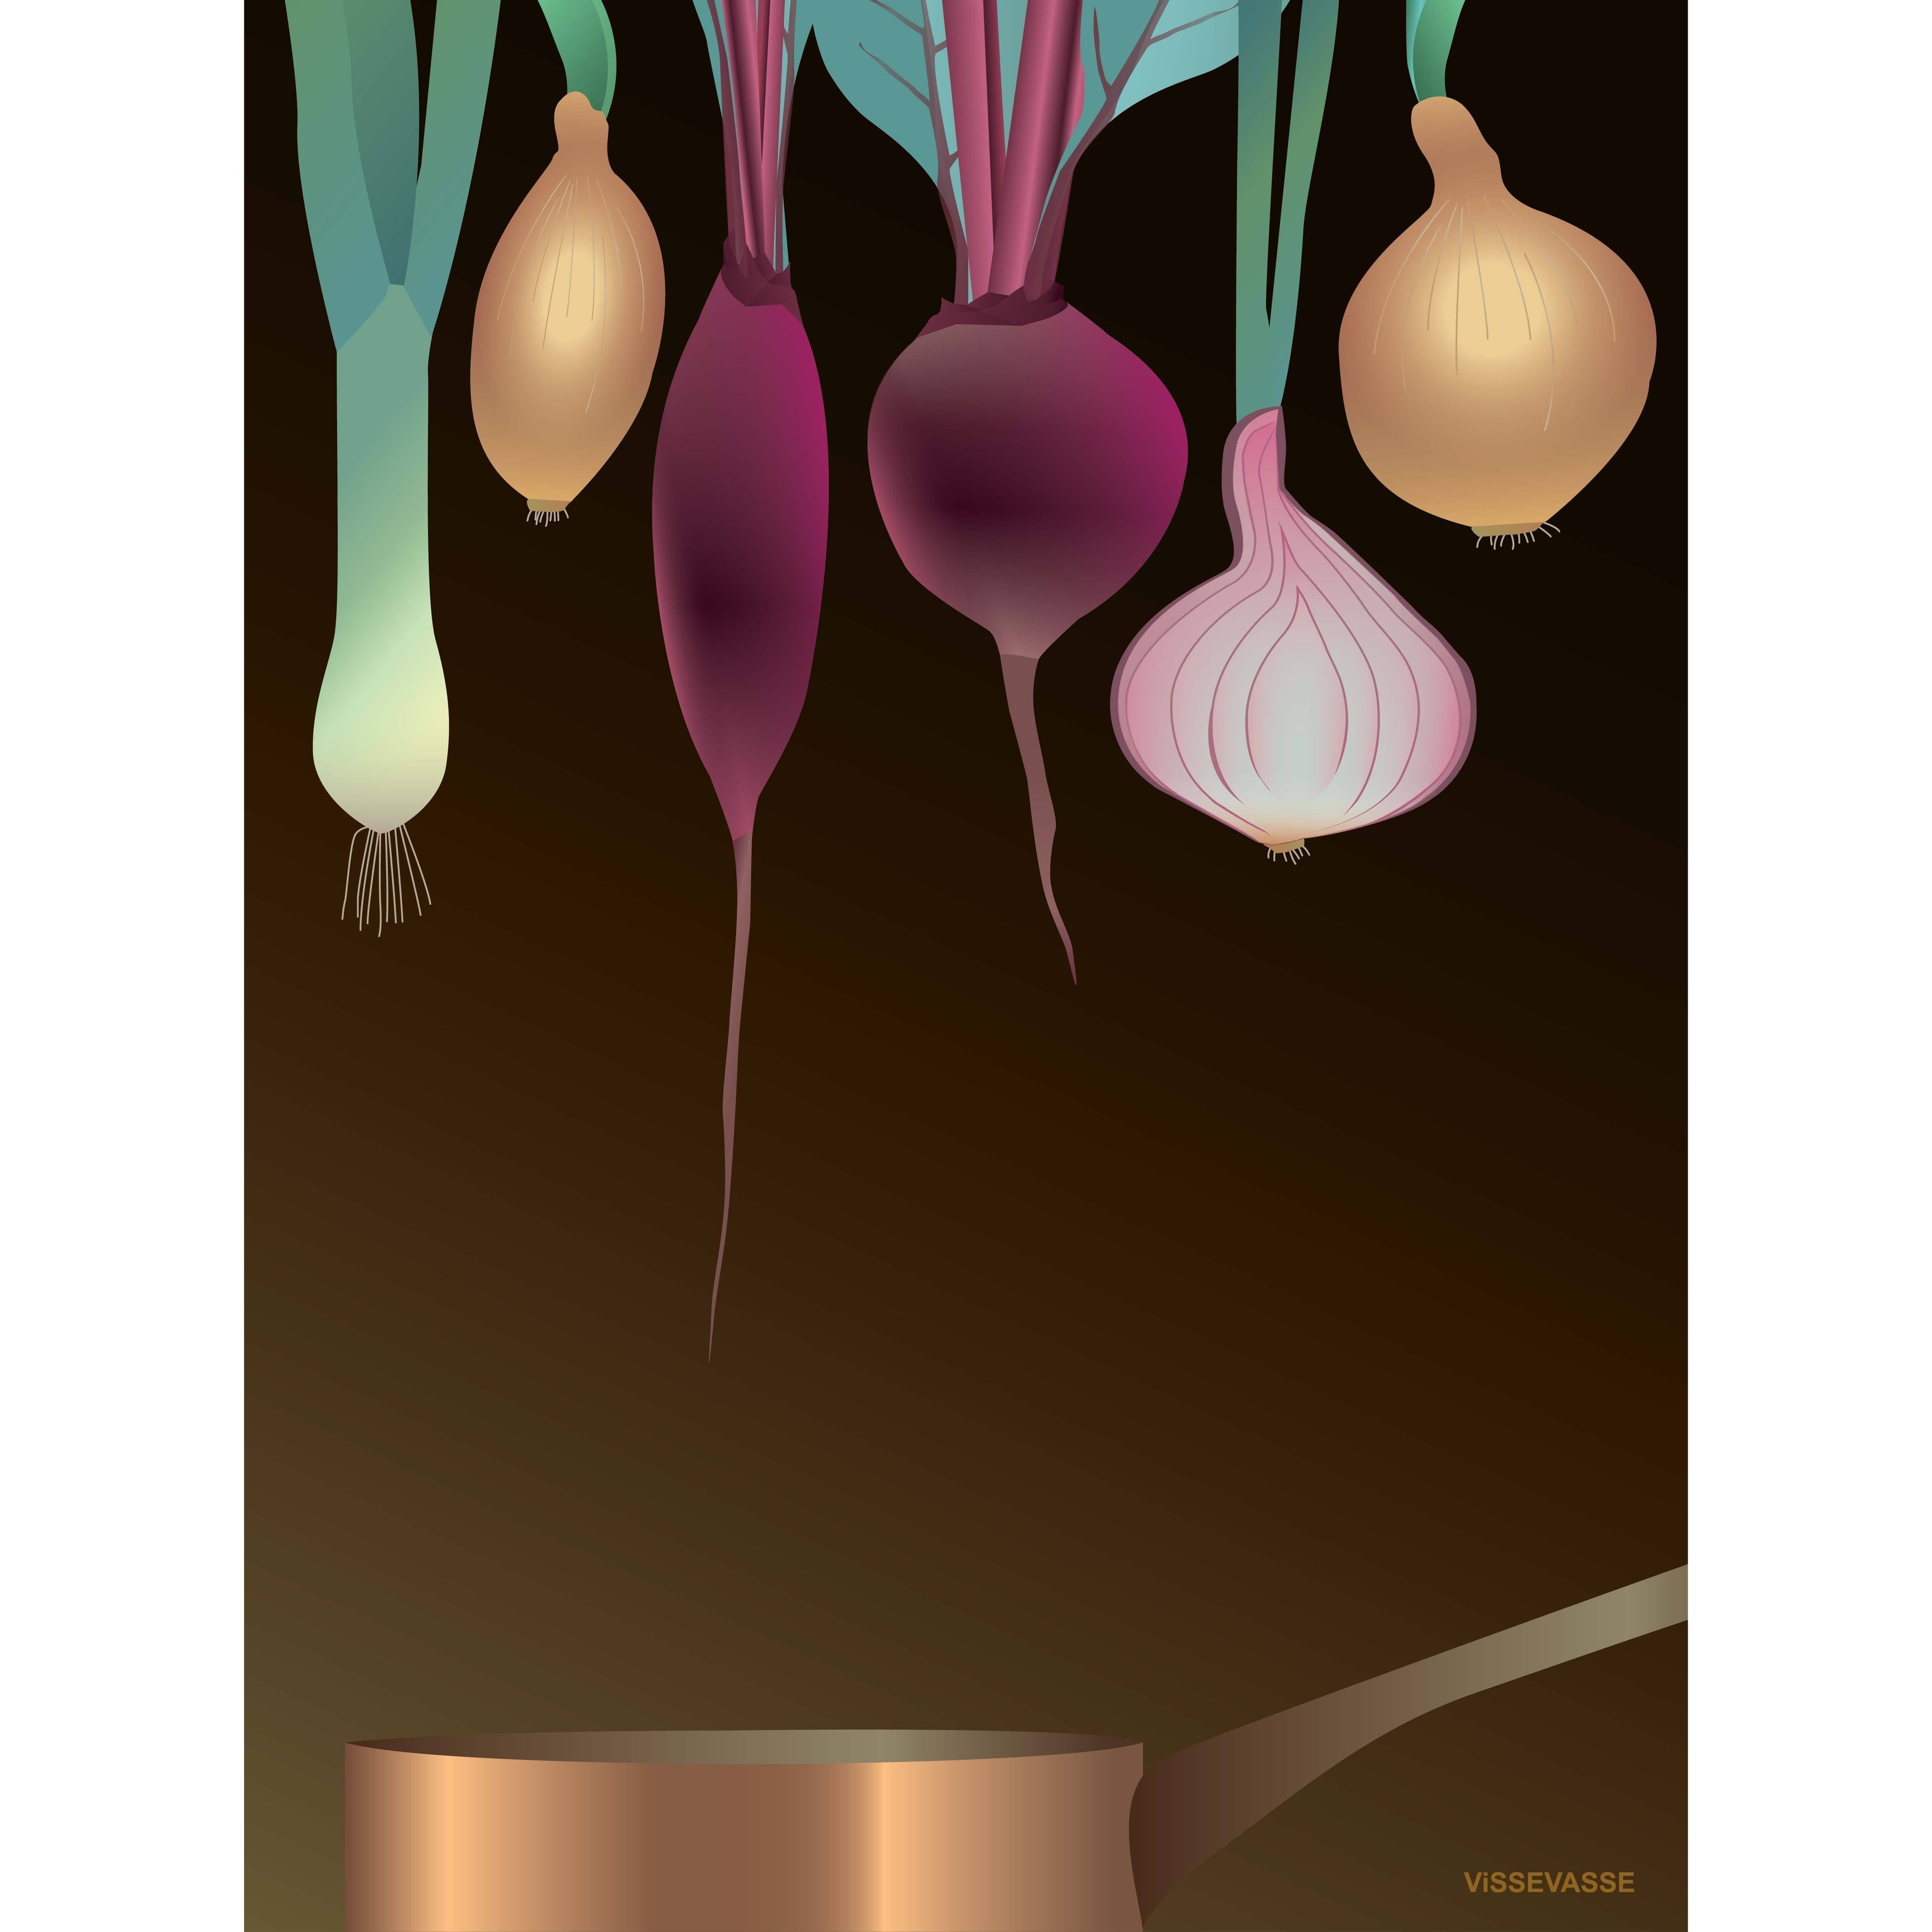 Vissevasse -Gemüseplakat, 15 x21 cm